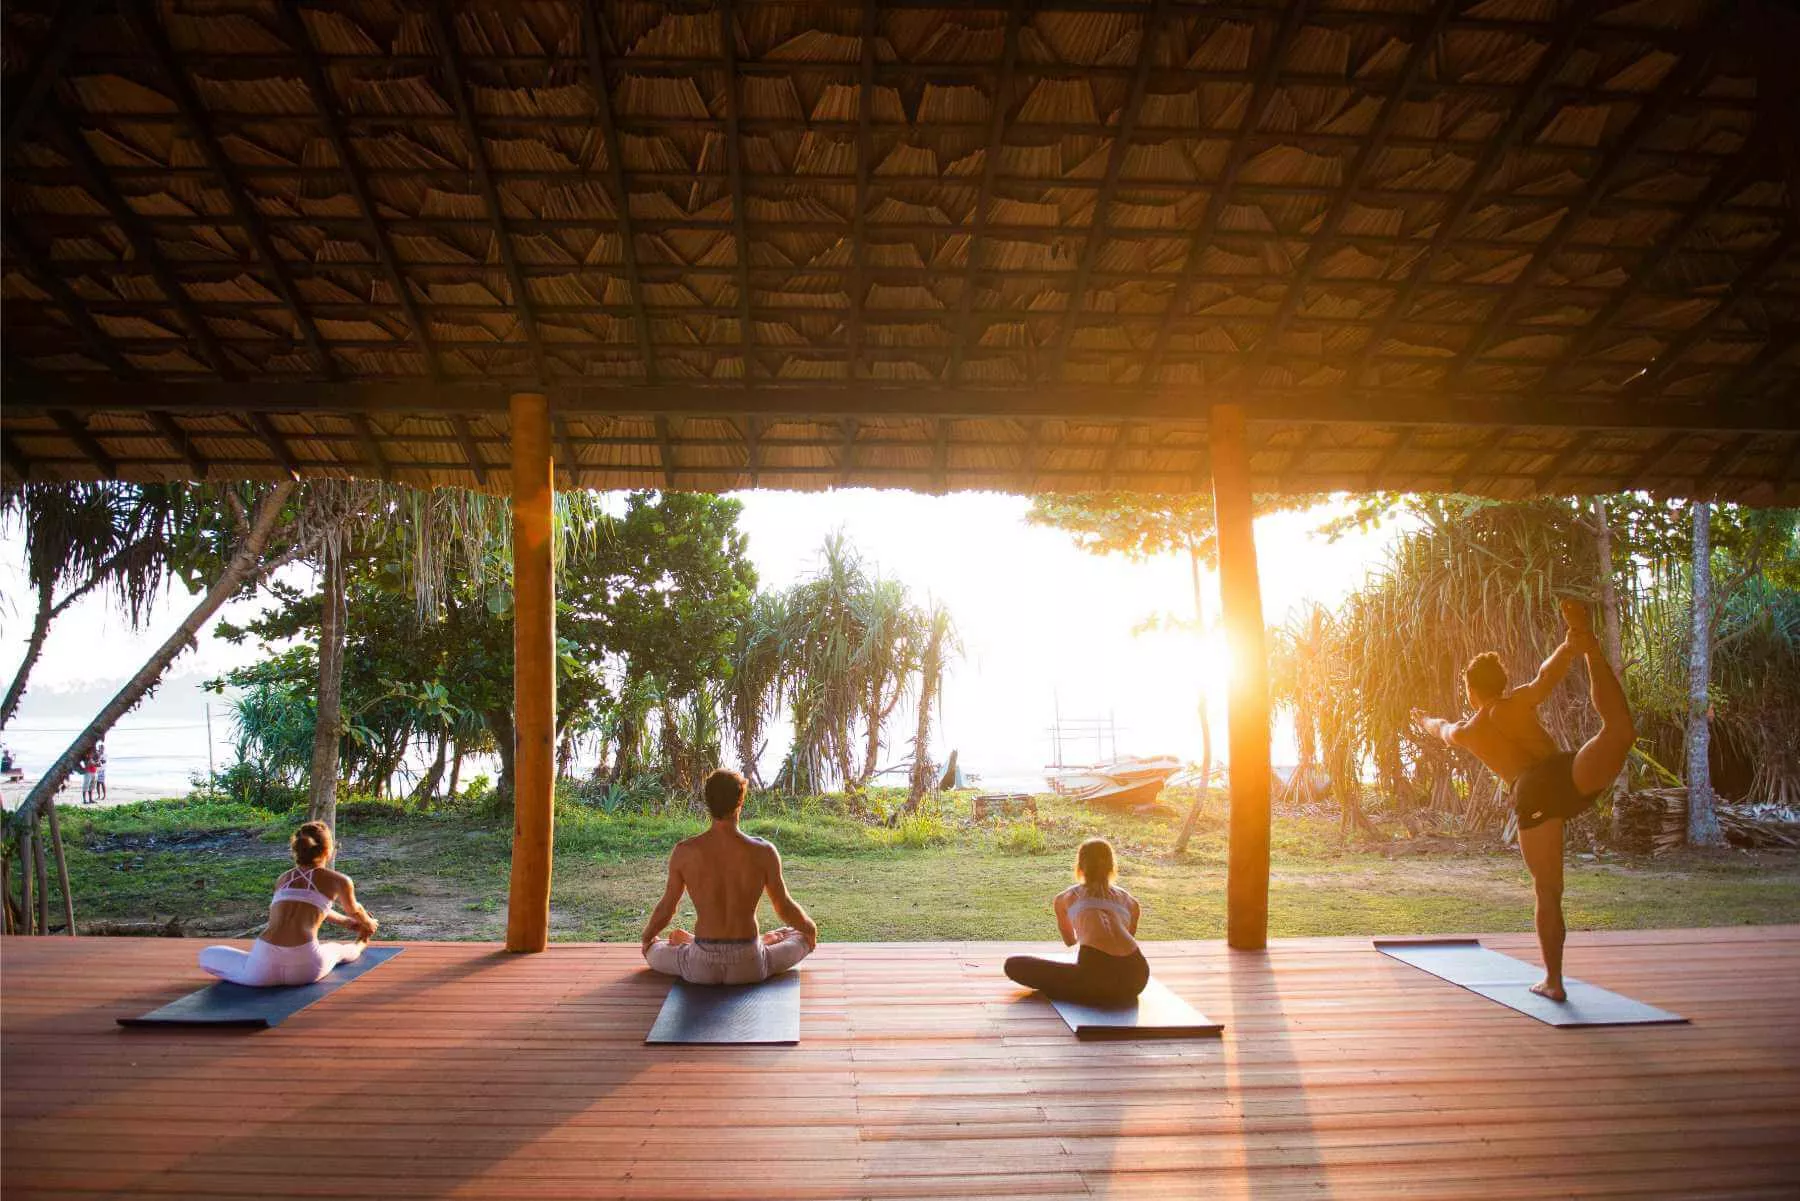 Yoga Reiki Meditation in Sri Lanka, Central Asia | Yoga,Meditation - Rated 1.3